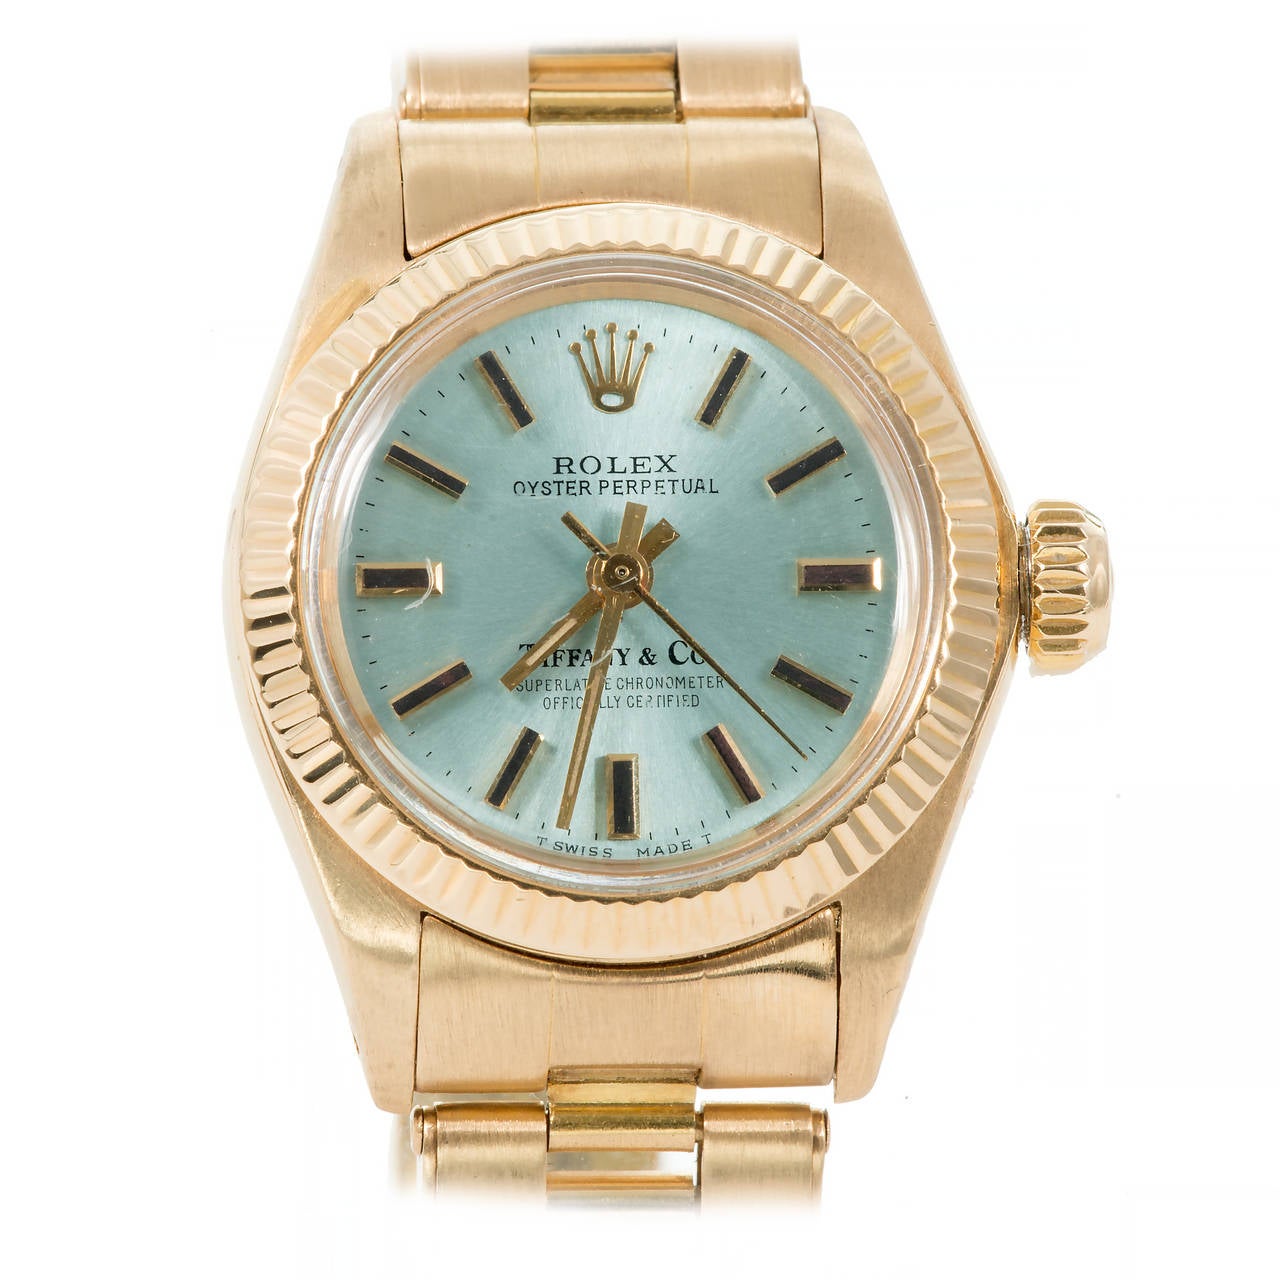 Tiffany & Co. Rolex Lady's Yellow Gold Ice Blue Dial Wristwatch Ref 6719